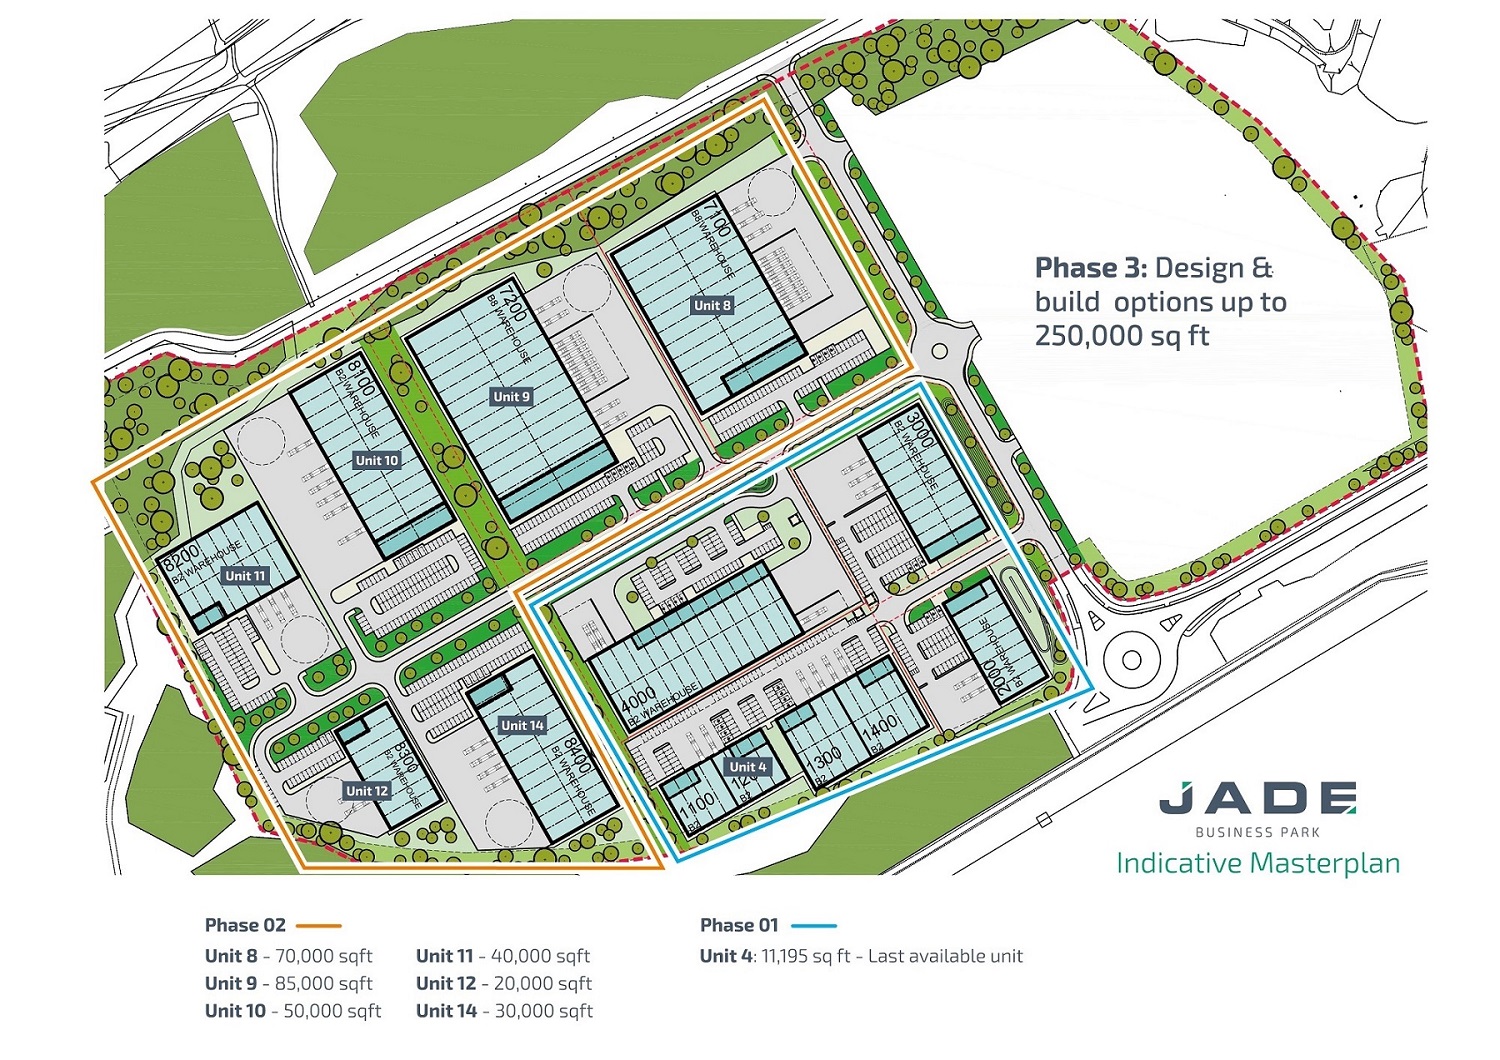 Jade Business Park Masterplan